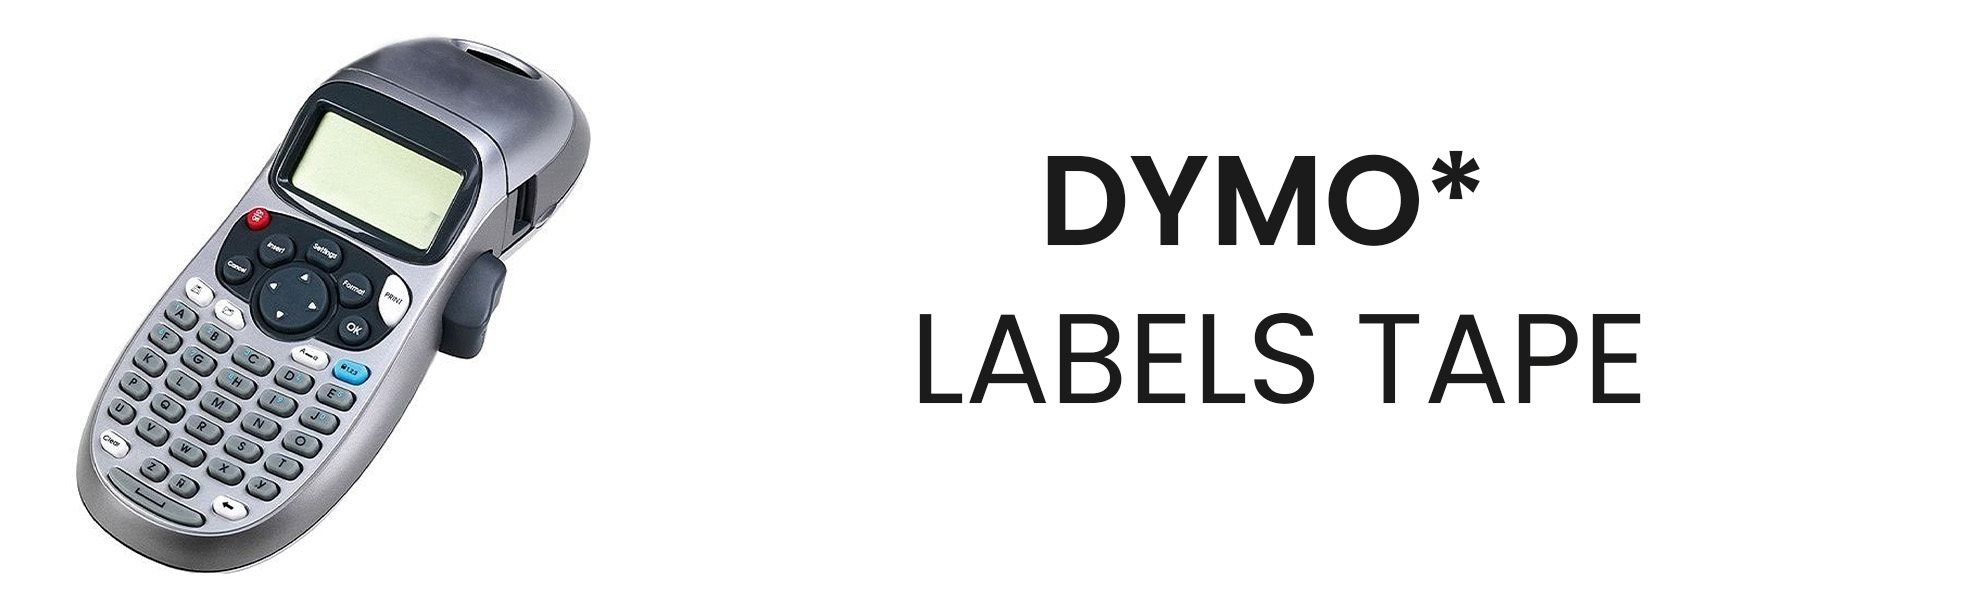 DYMO_ labels